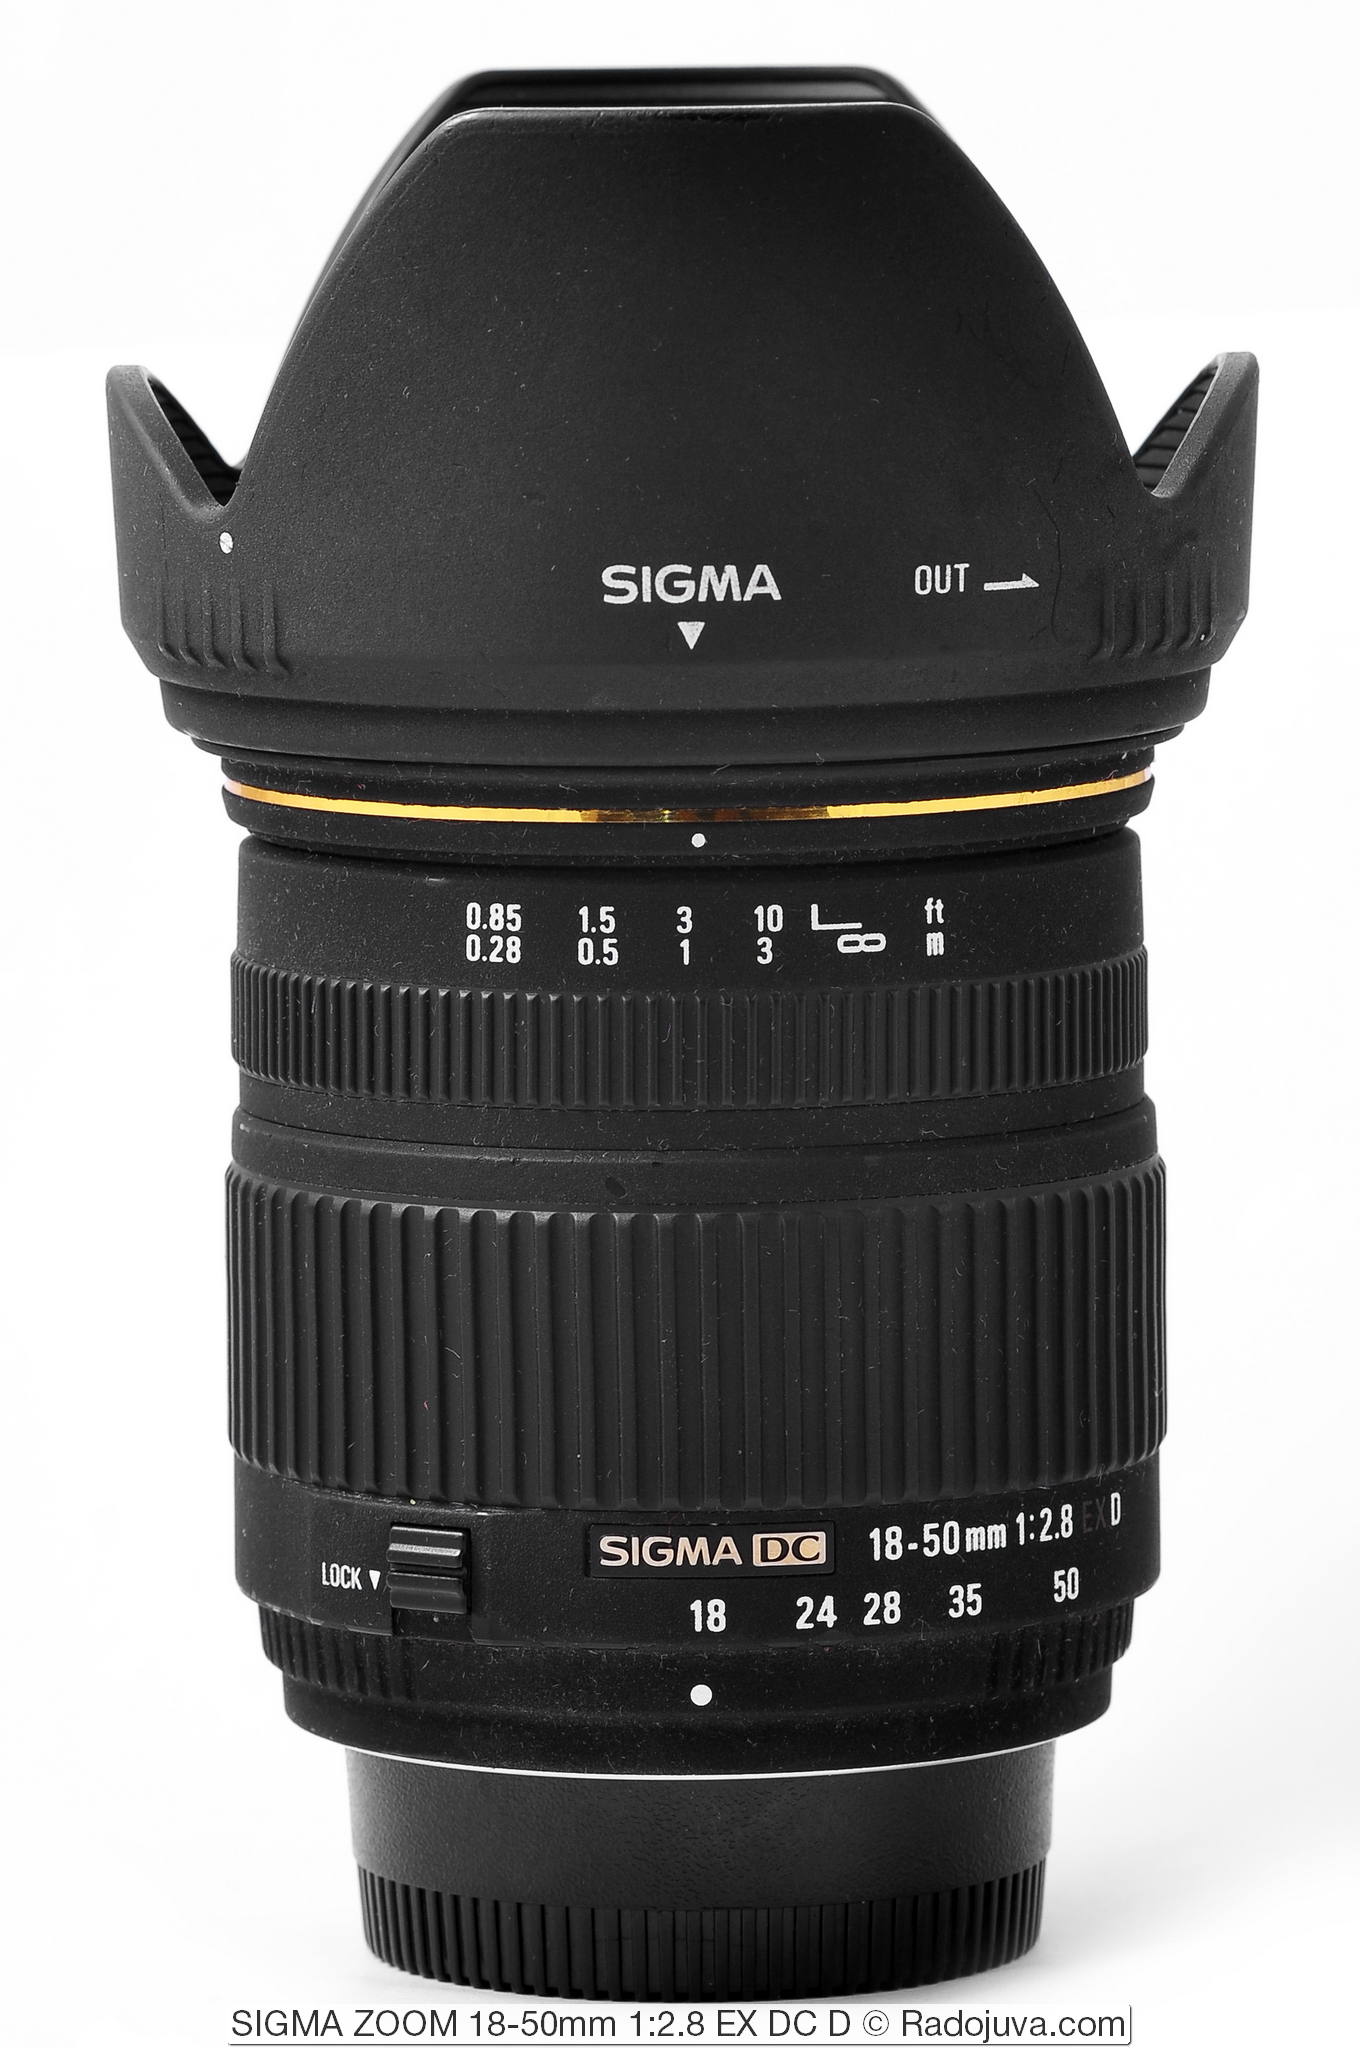 SIGMA ZOOM 18-50mm 1:2.8 EX DC (D)